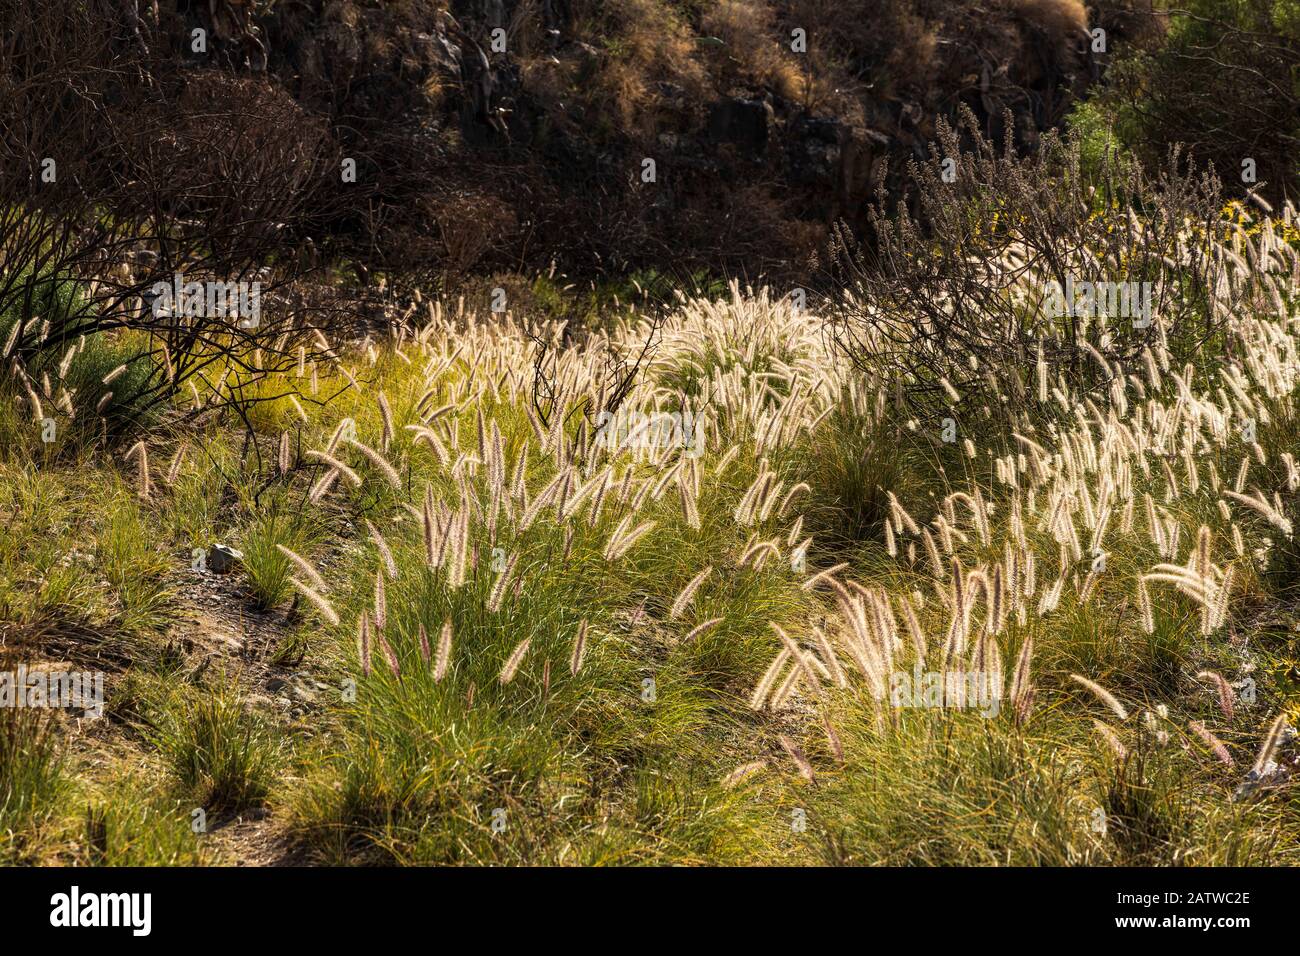 Pennisetum setaceum, rabo de gato, fountain grass, backlit in a barranco in San Miguel, tenerife, Canary Islands, Spain Stock Photo